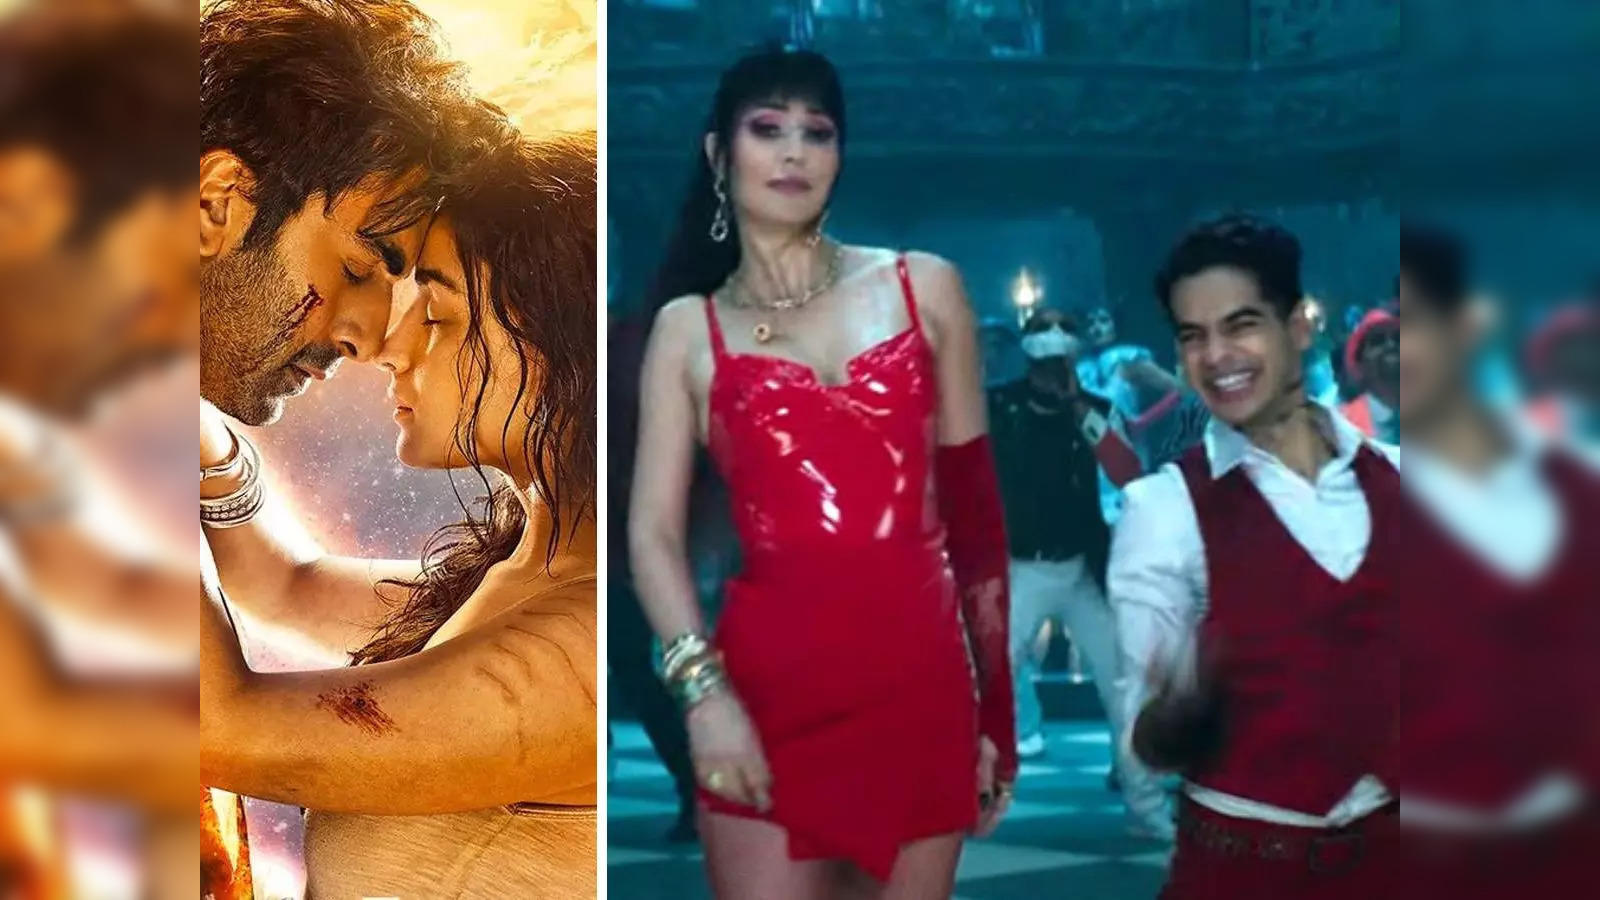 Chikni Sex Video - katrina kaif: Here's how Katrina Kaif got back at Ranbir Kapoor for using  her hit song 'Chikni Chameli' in 'Brahmastra' - The Economic Times